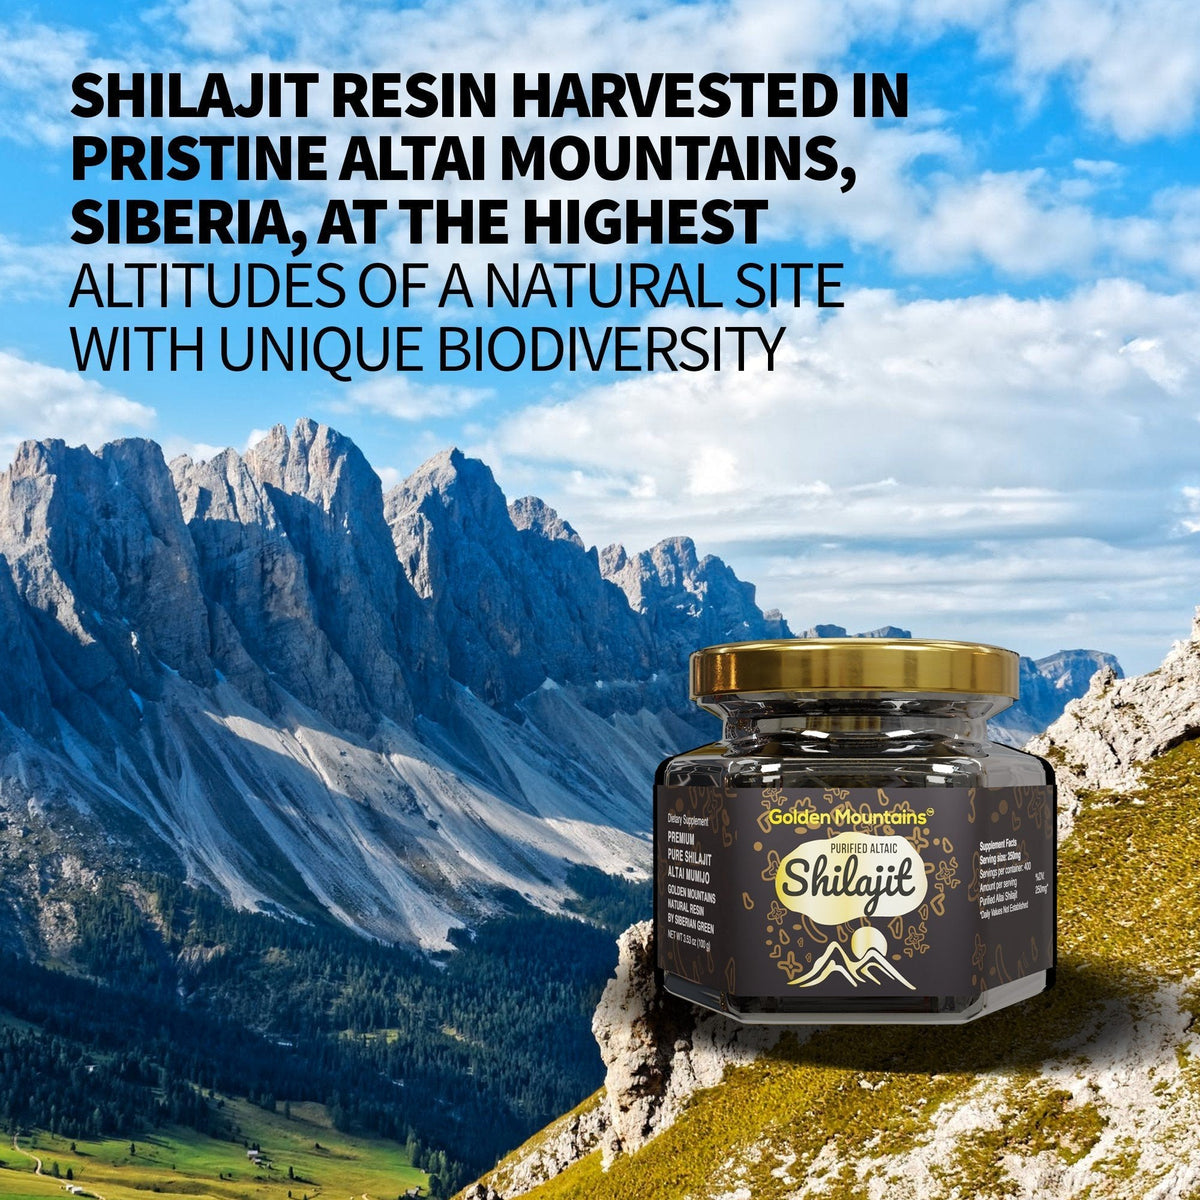 Golden Mountains Shilajit Resina Premium Pura Auténtica Altai Siberiana 100g - Cuchara Medidora - Certificado de Calidad Exclusivo